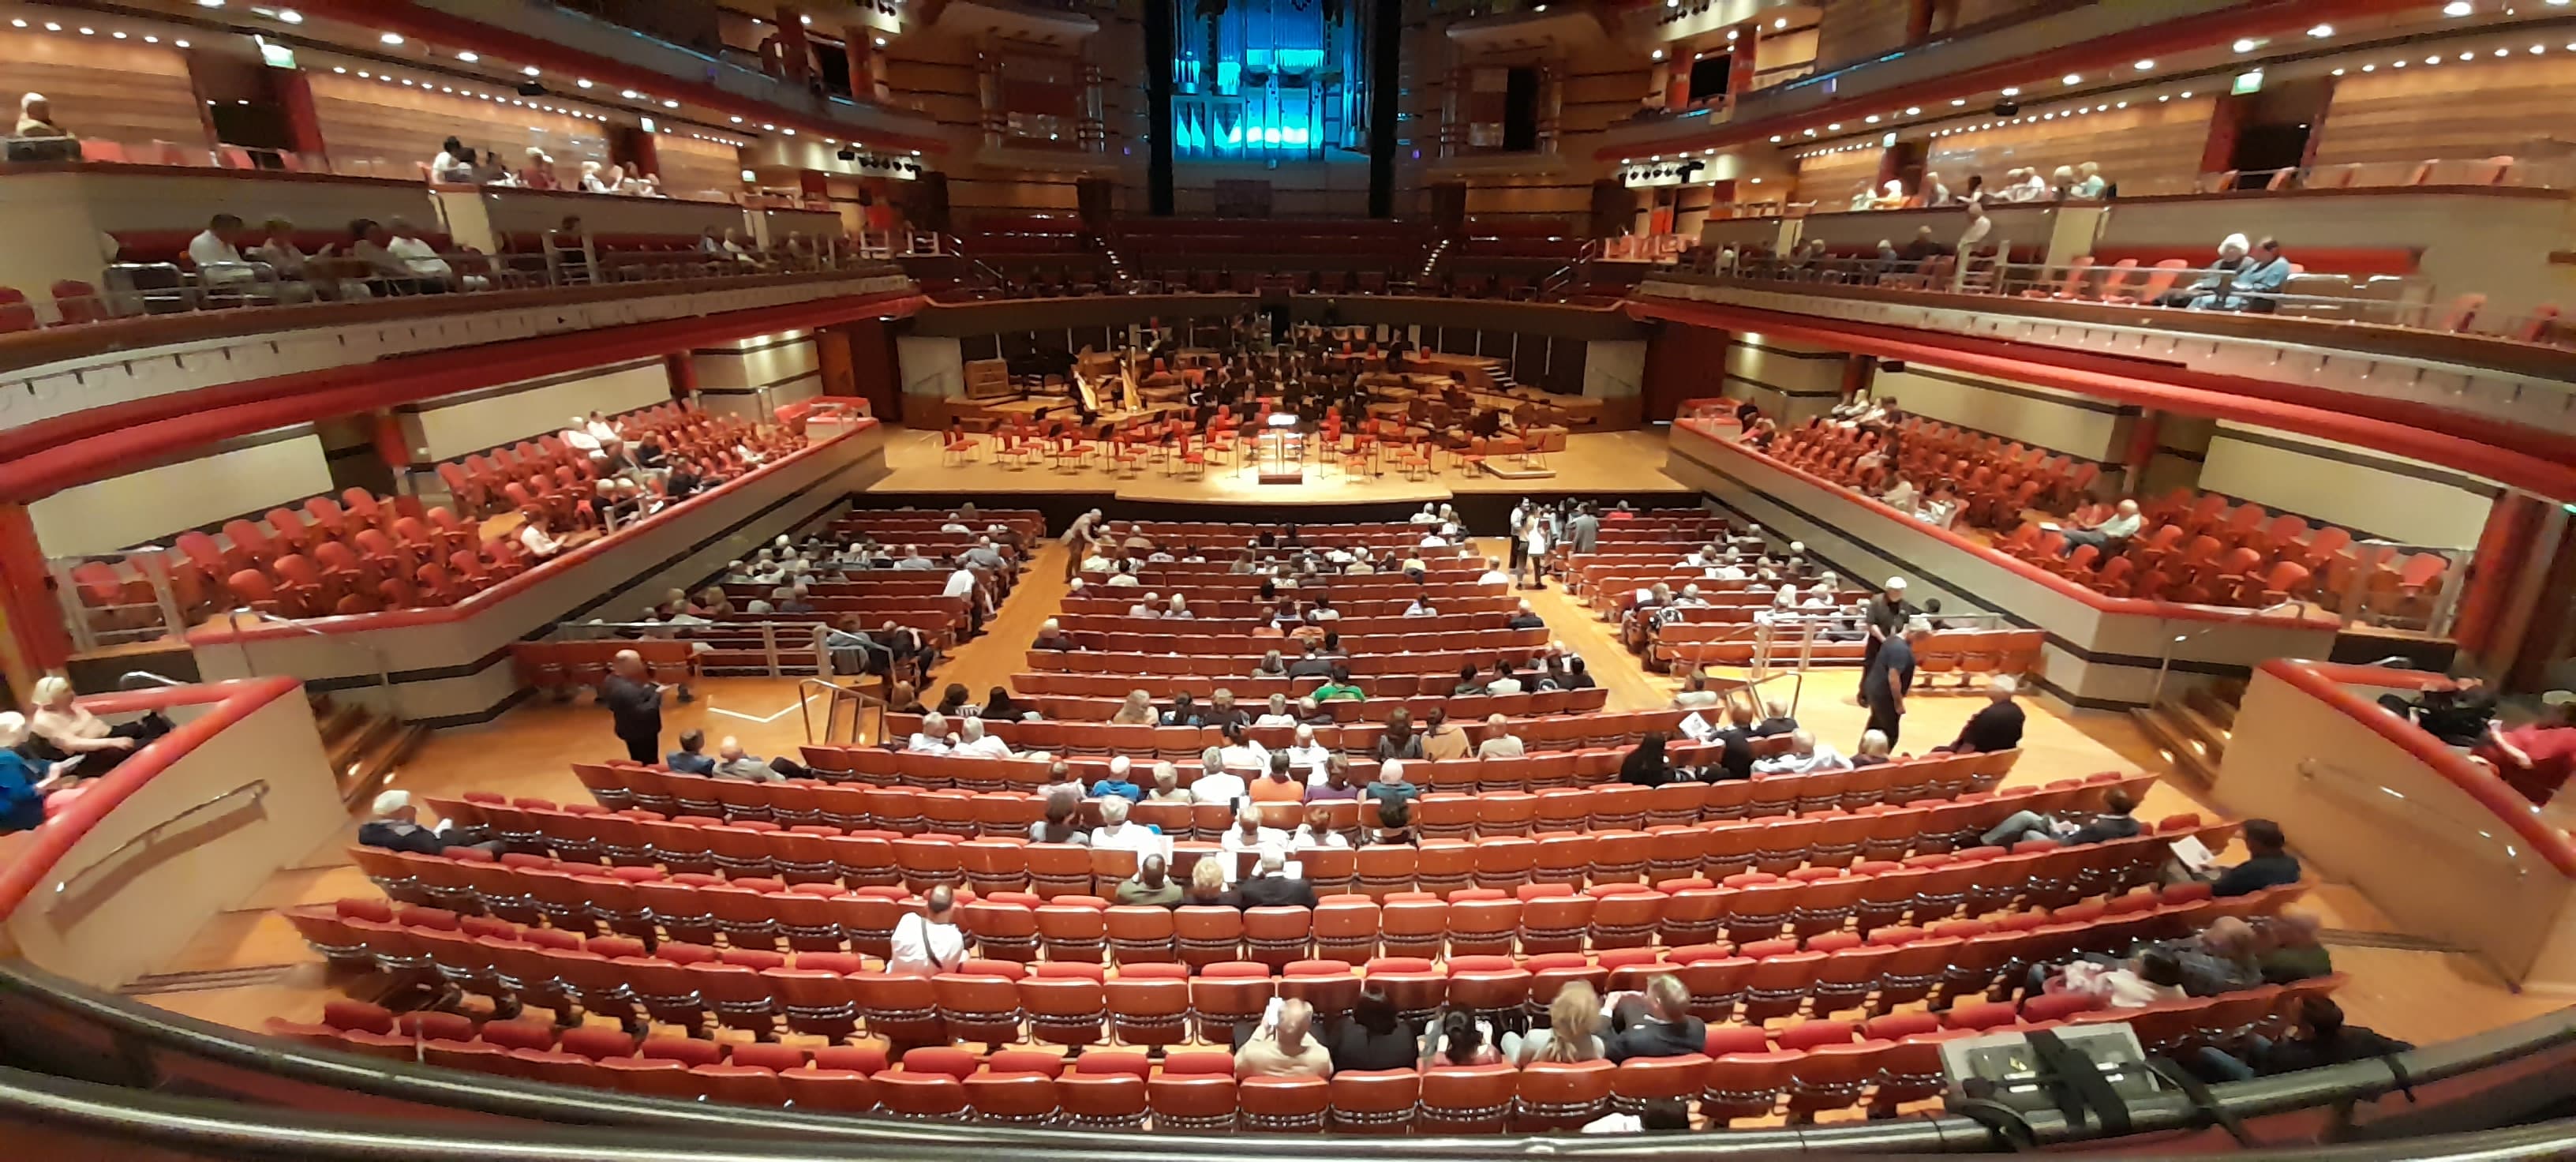 Just in: Birmingham’s shockingly empty Symphony Hall